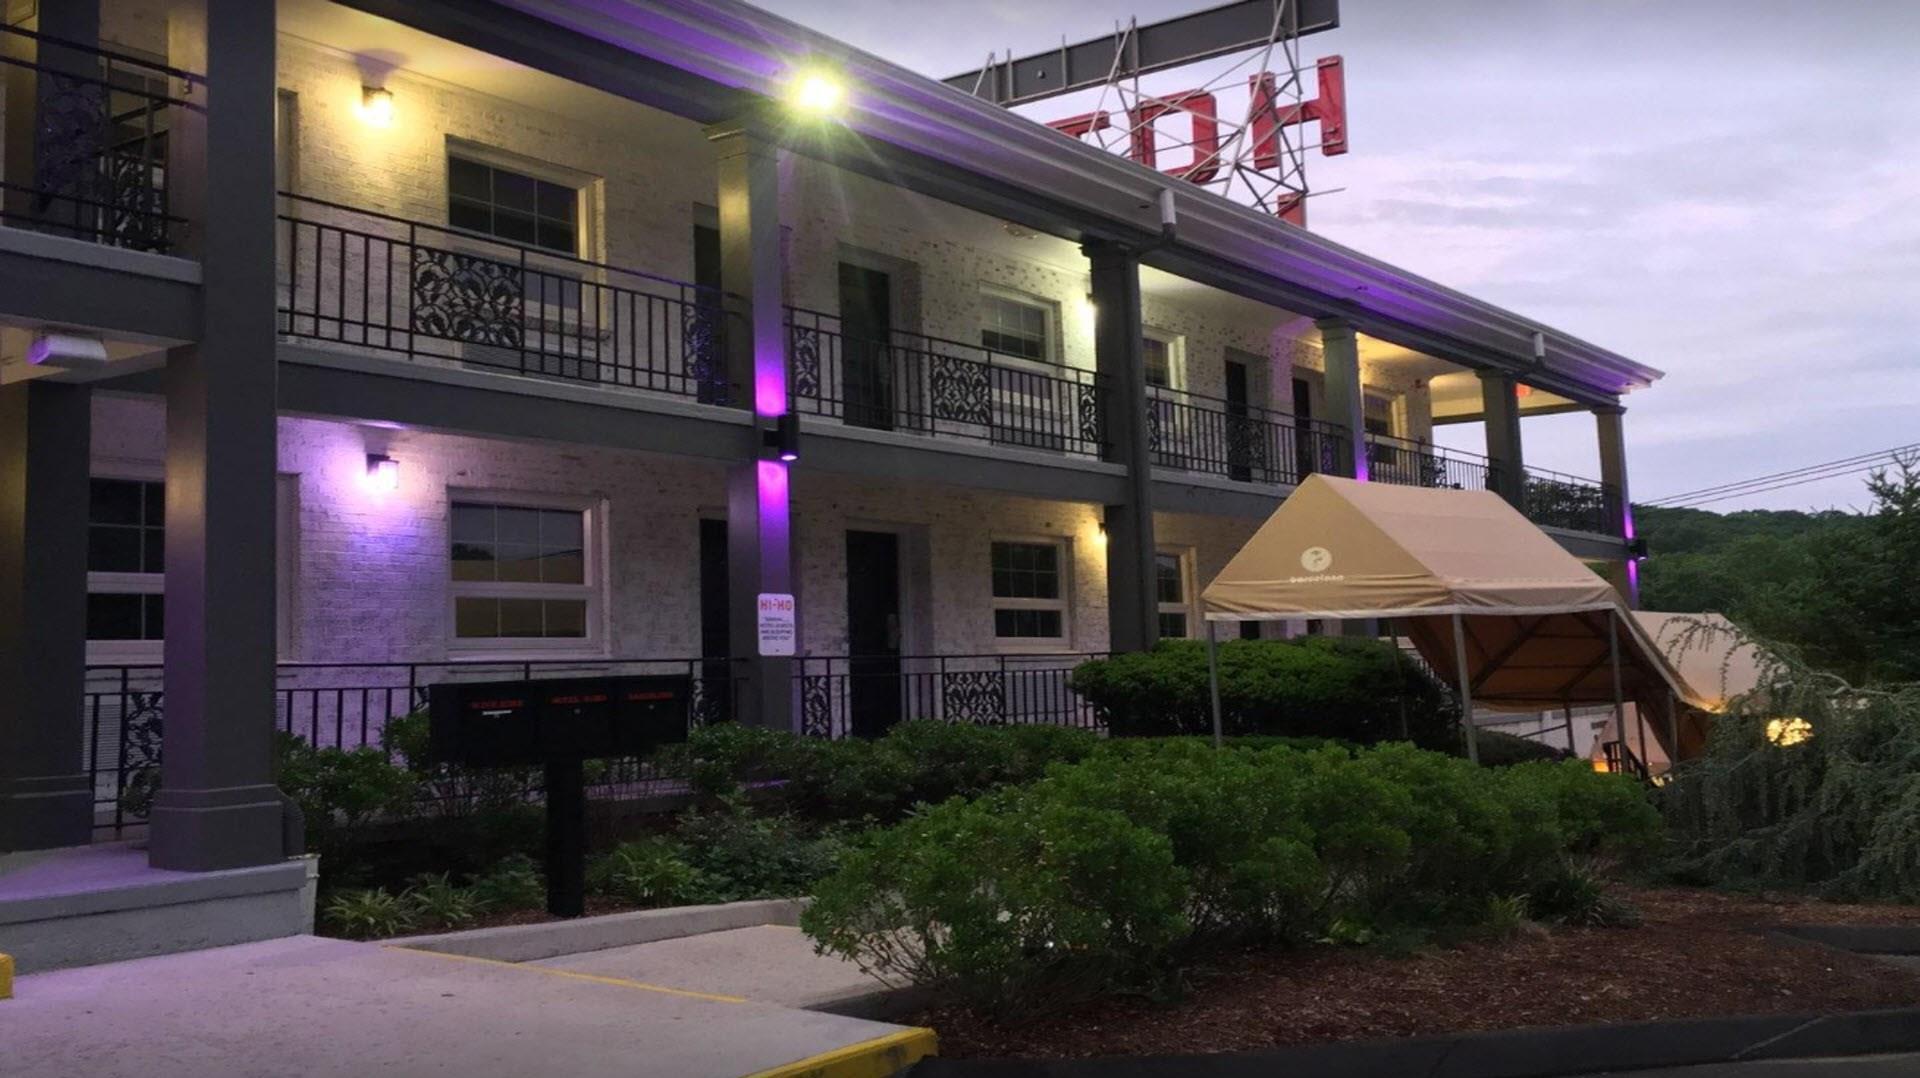 Hotel Hi-Ho in Fairfield, CT